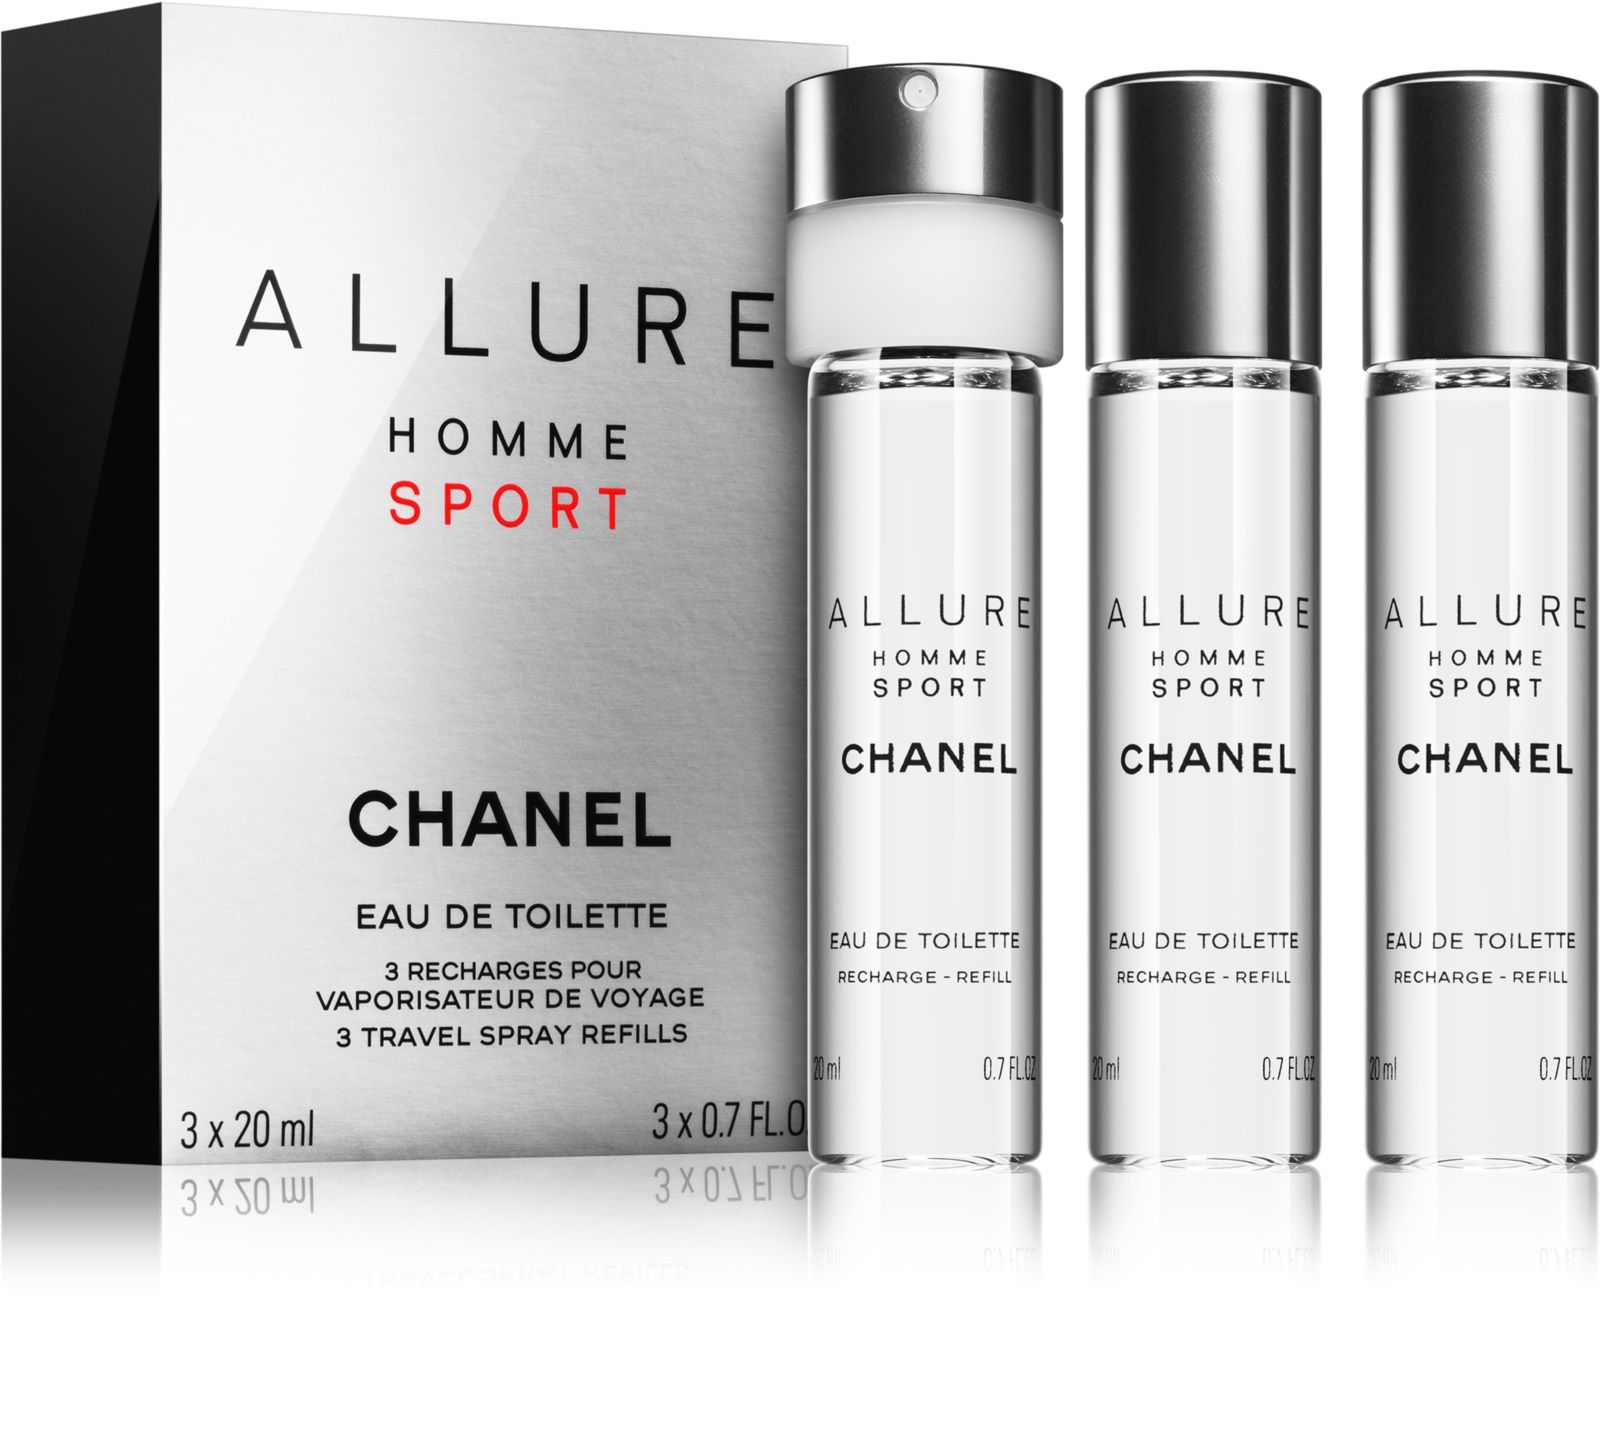 Chanel allure homme sport цены. Шанель Allure homme Sport. Chanel Allure homme Sport. Chanel Allure Sport. Chanel Allure homme Sport мужские.